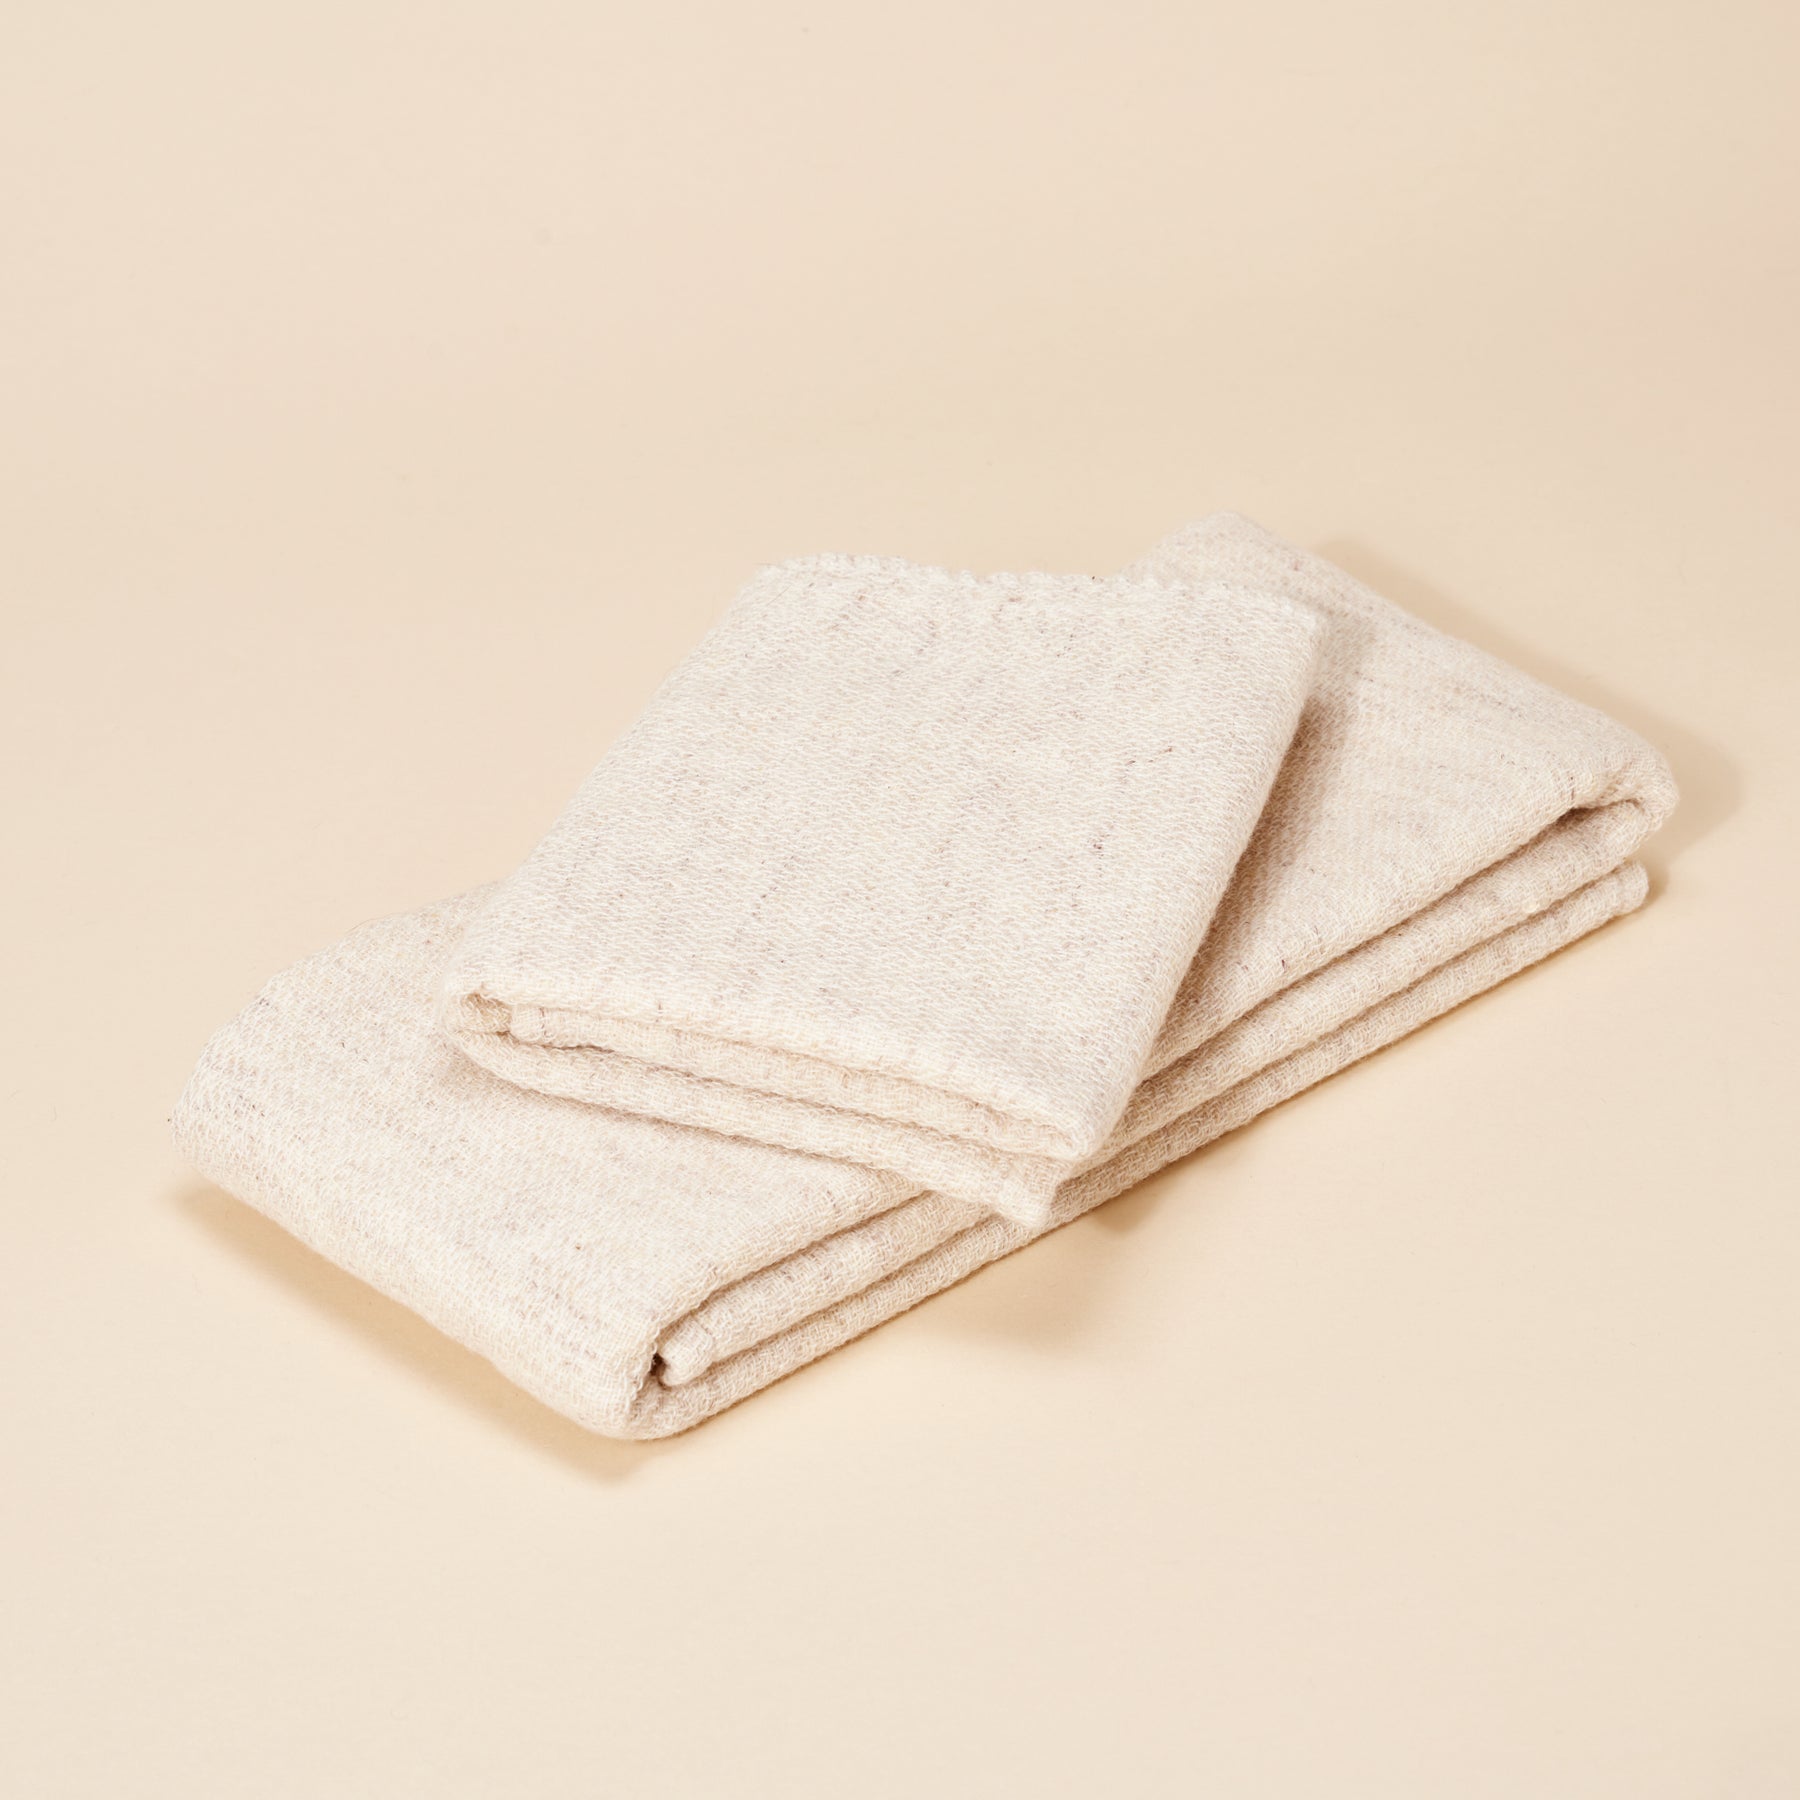 Morihata International Morihata Claire Organic Cotton Japanese Bath Towels - Bath Towel, Almond Powder